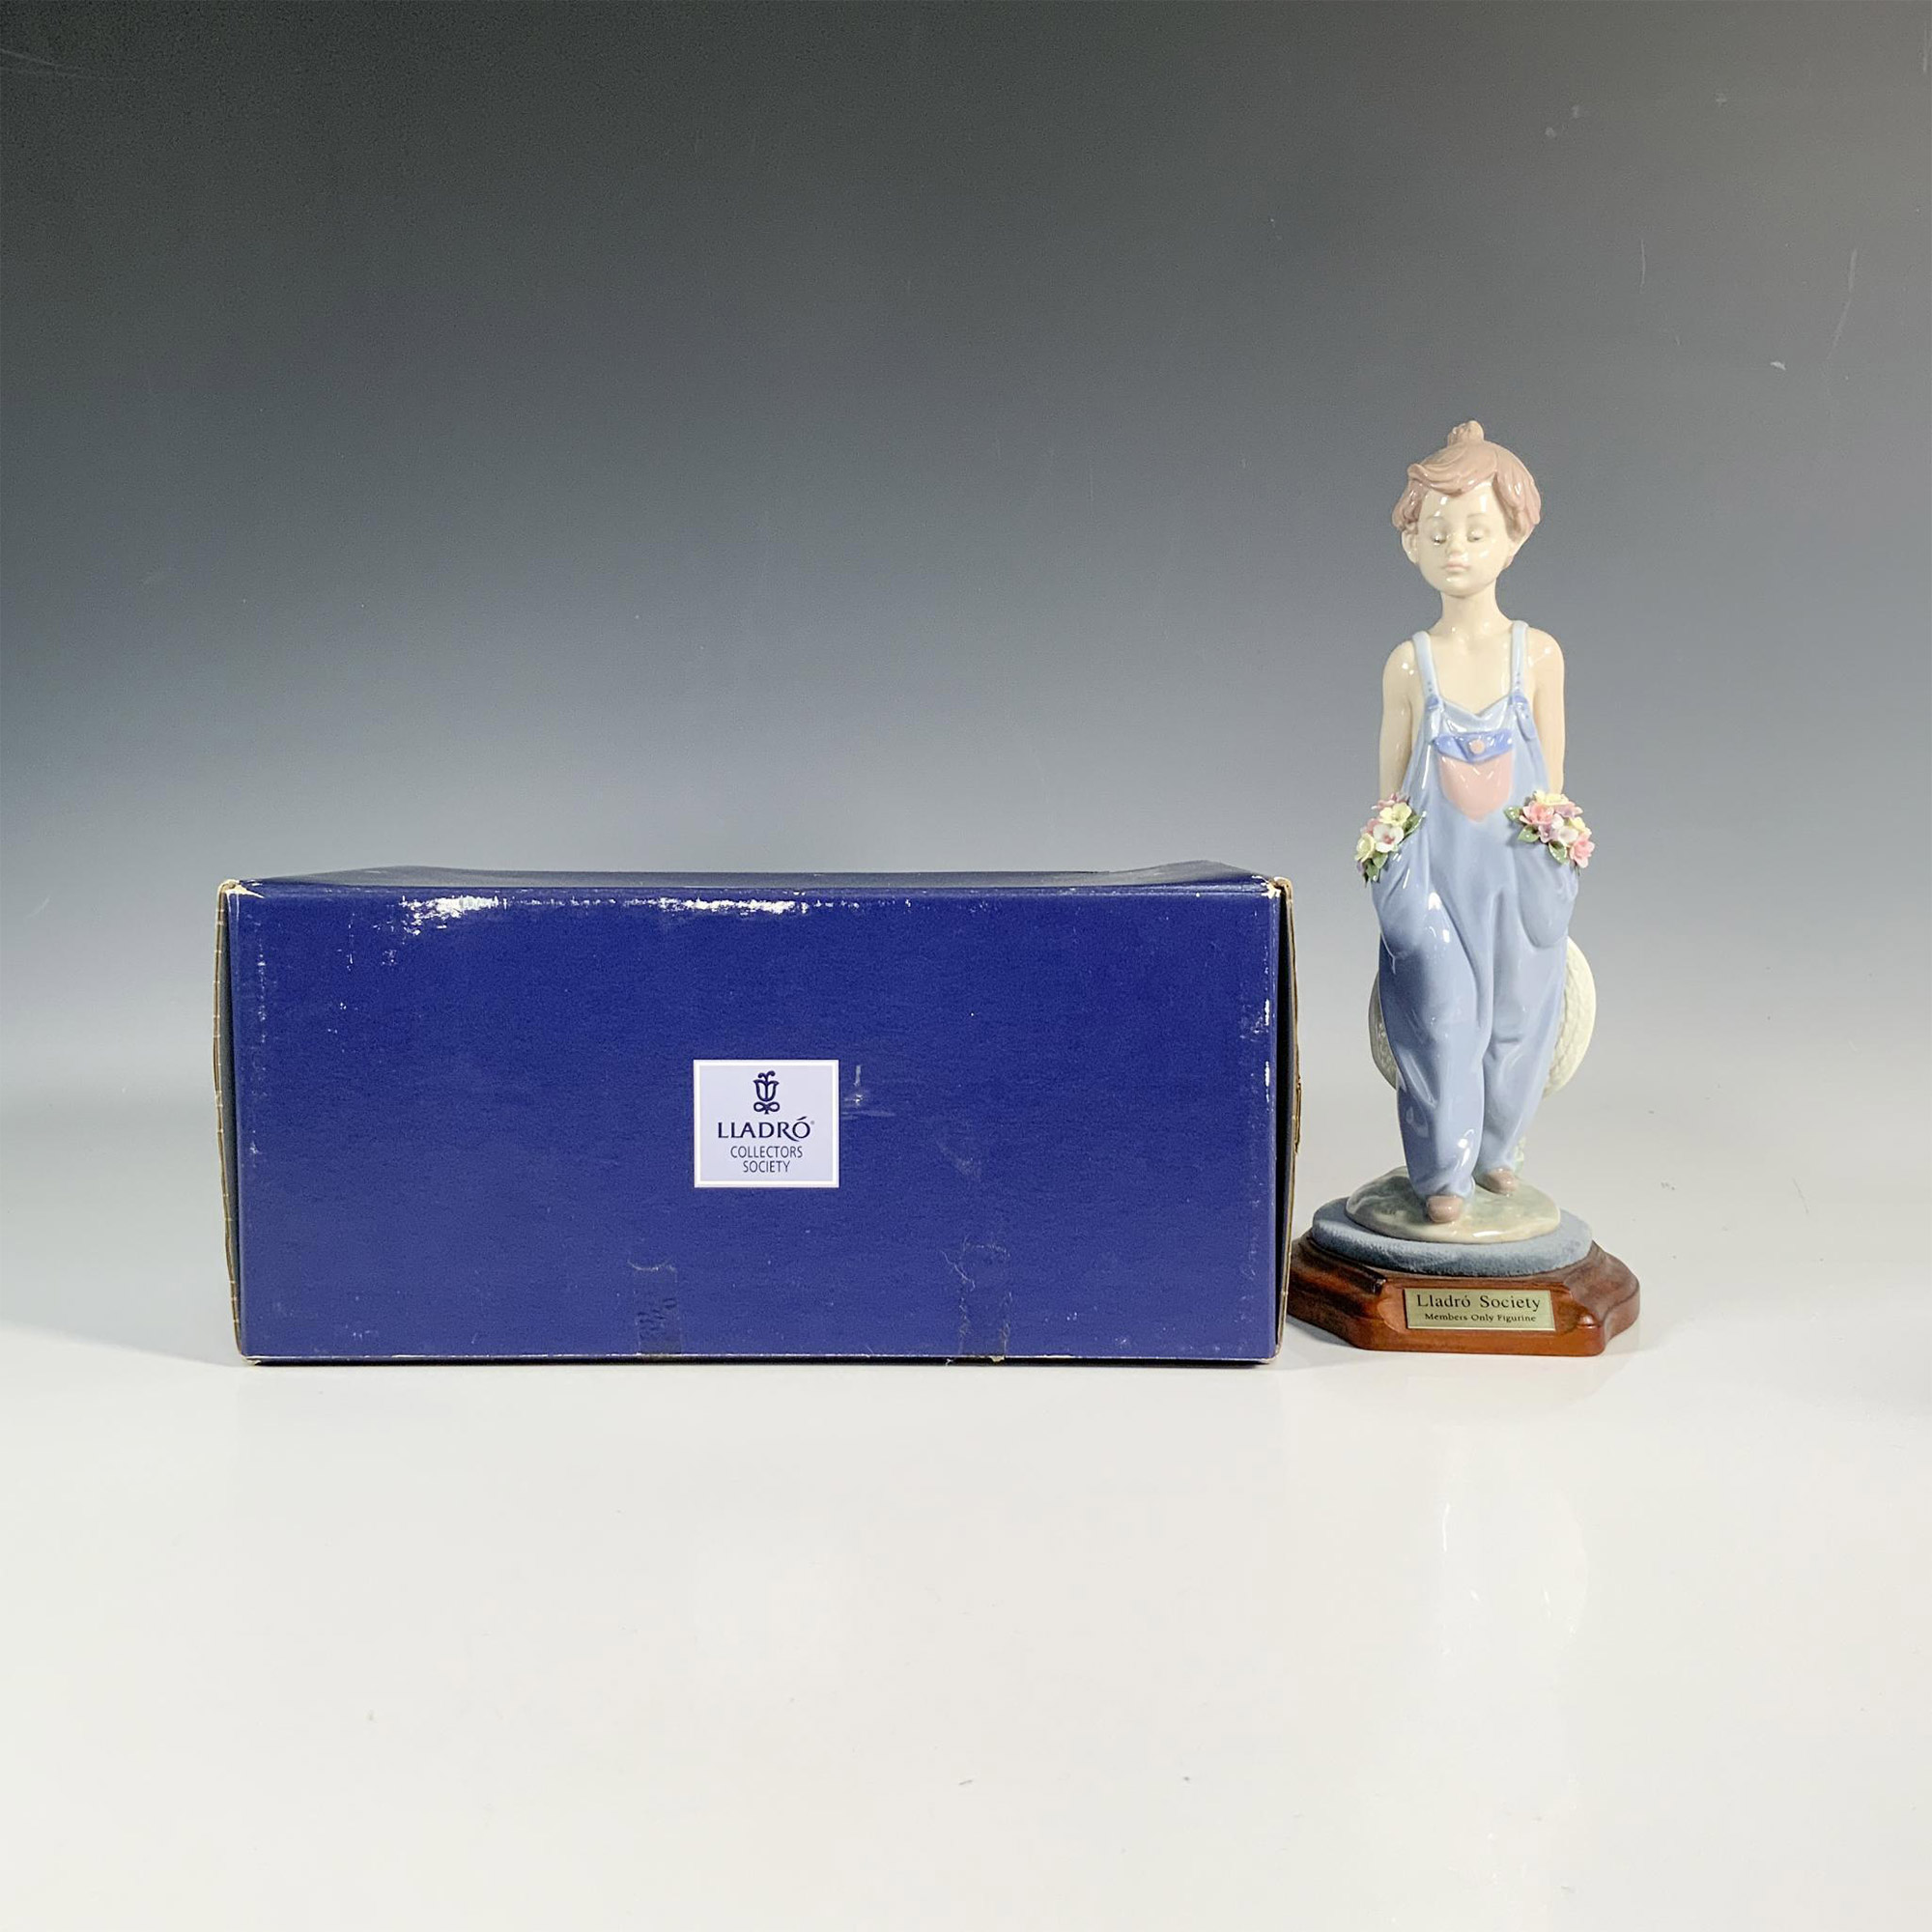 Pocket Full of Wishes 1007650 - Lladro Porcelain Figurine - Image 4 of 4